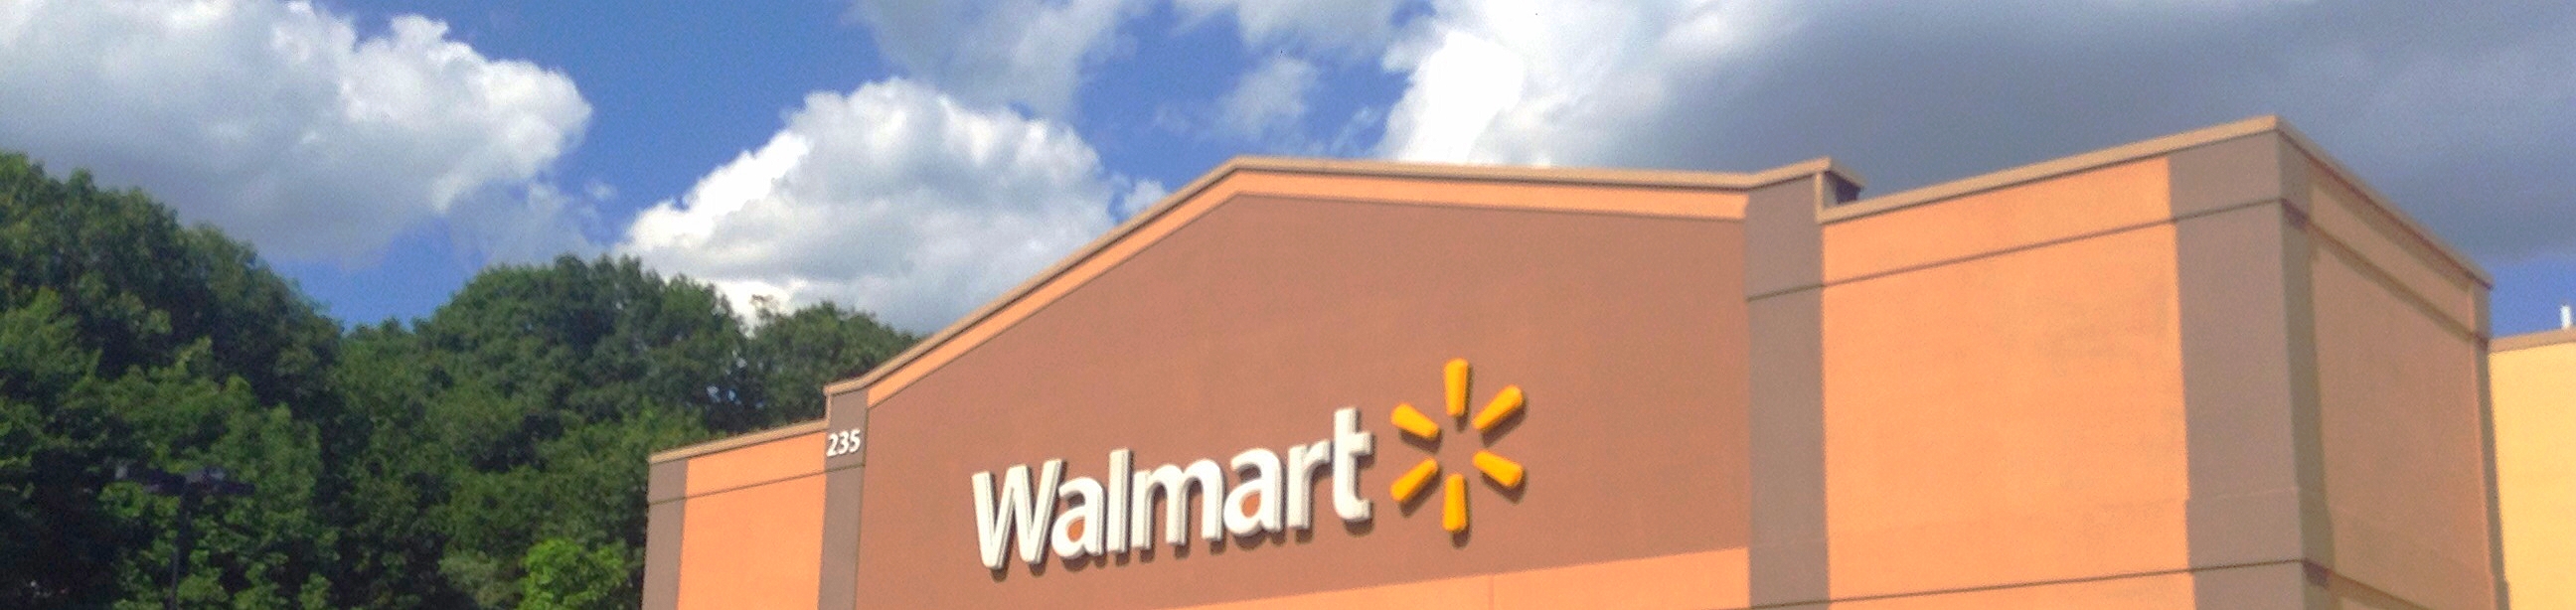 Is Walmart Open on Easter 2017? Blog